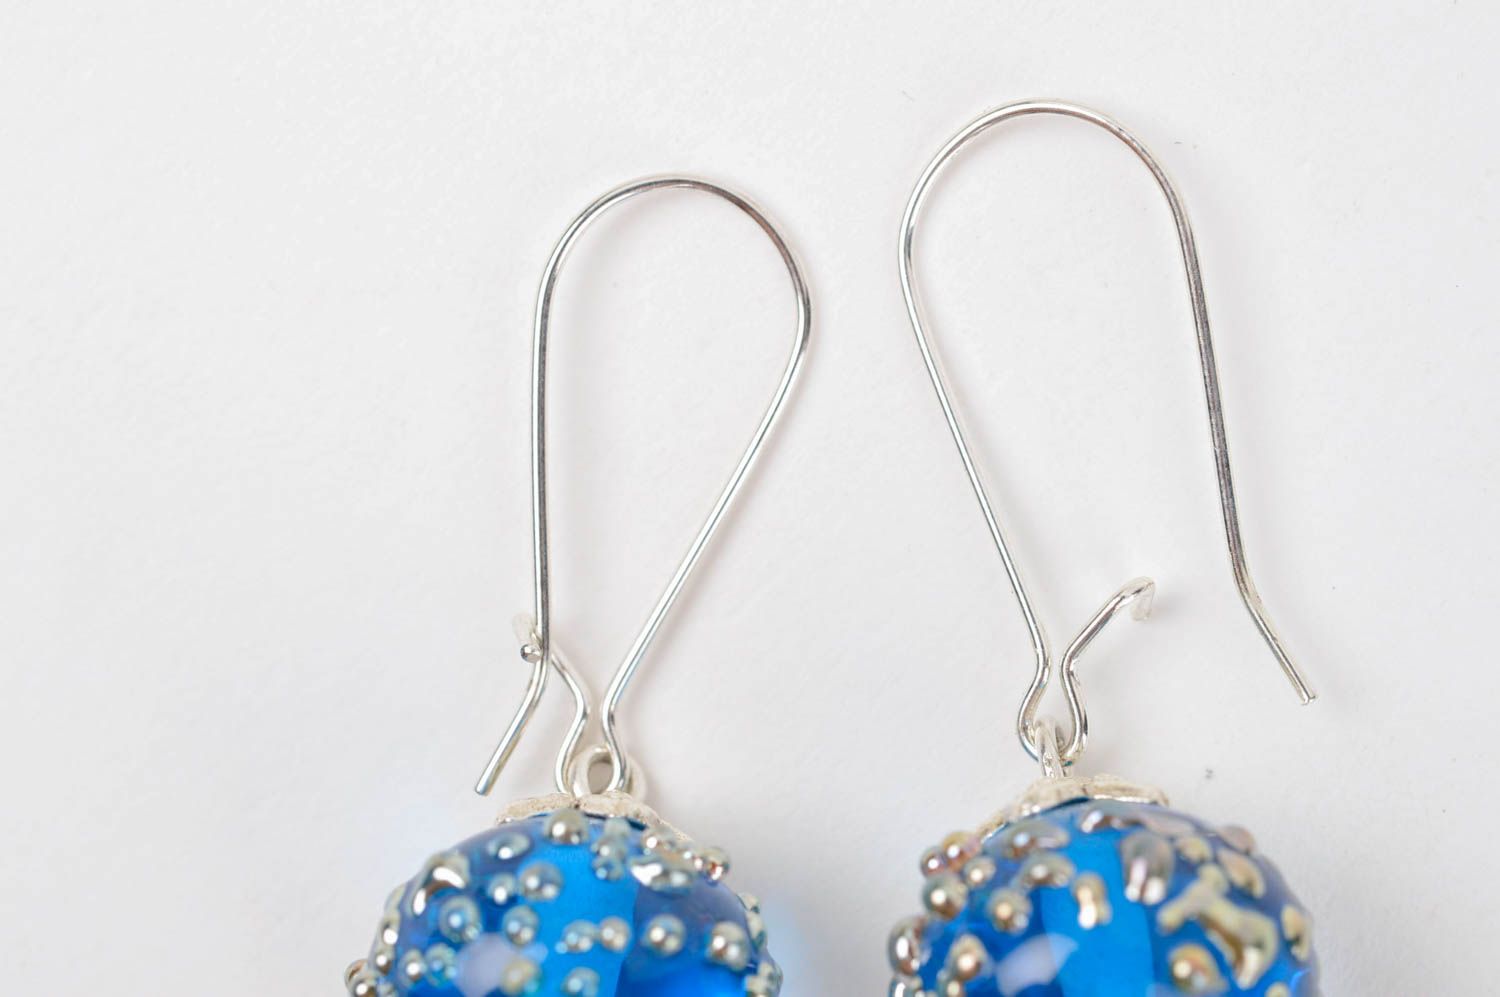 Stylish handmade glass earrings glass art fashion accessories artisan jewelry photo 3